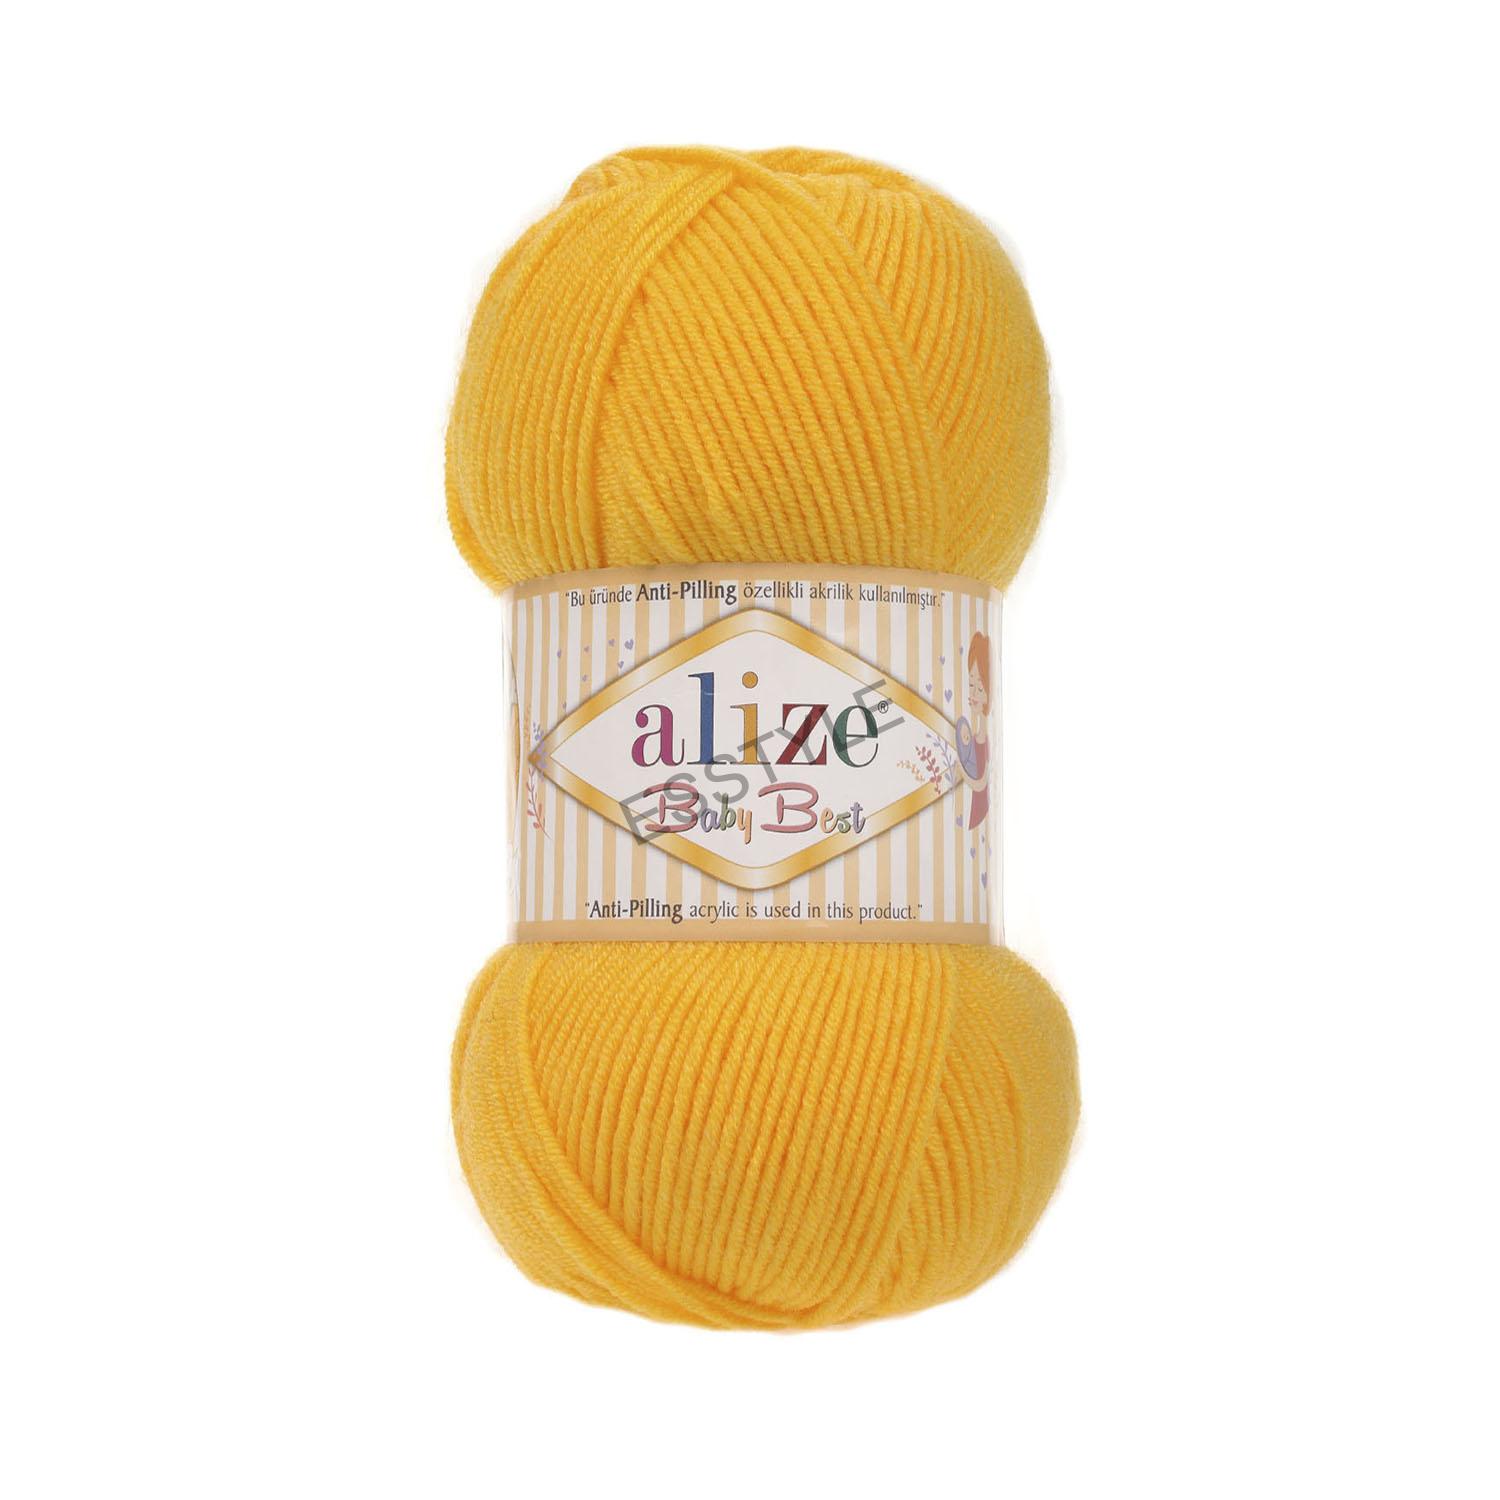 Priadza Alize - Baby best 100g - Anti-pilling - tmavo žltá č. 216